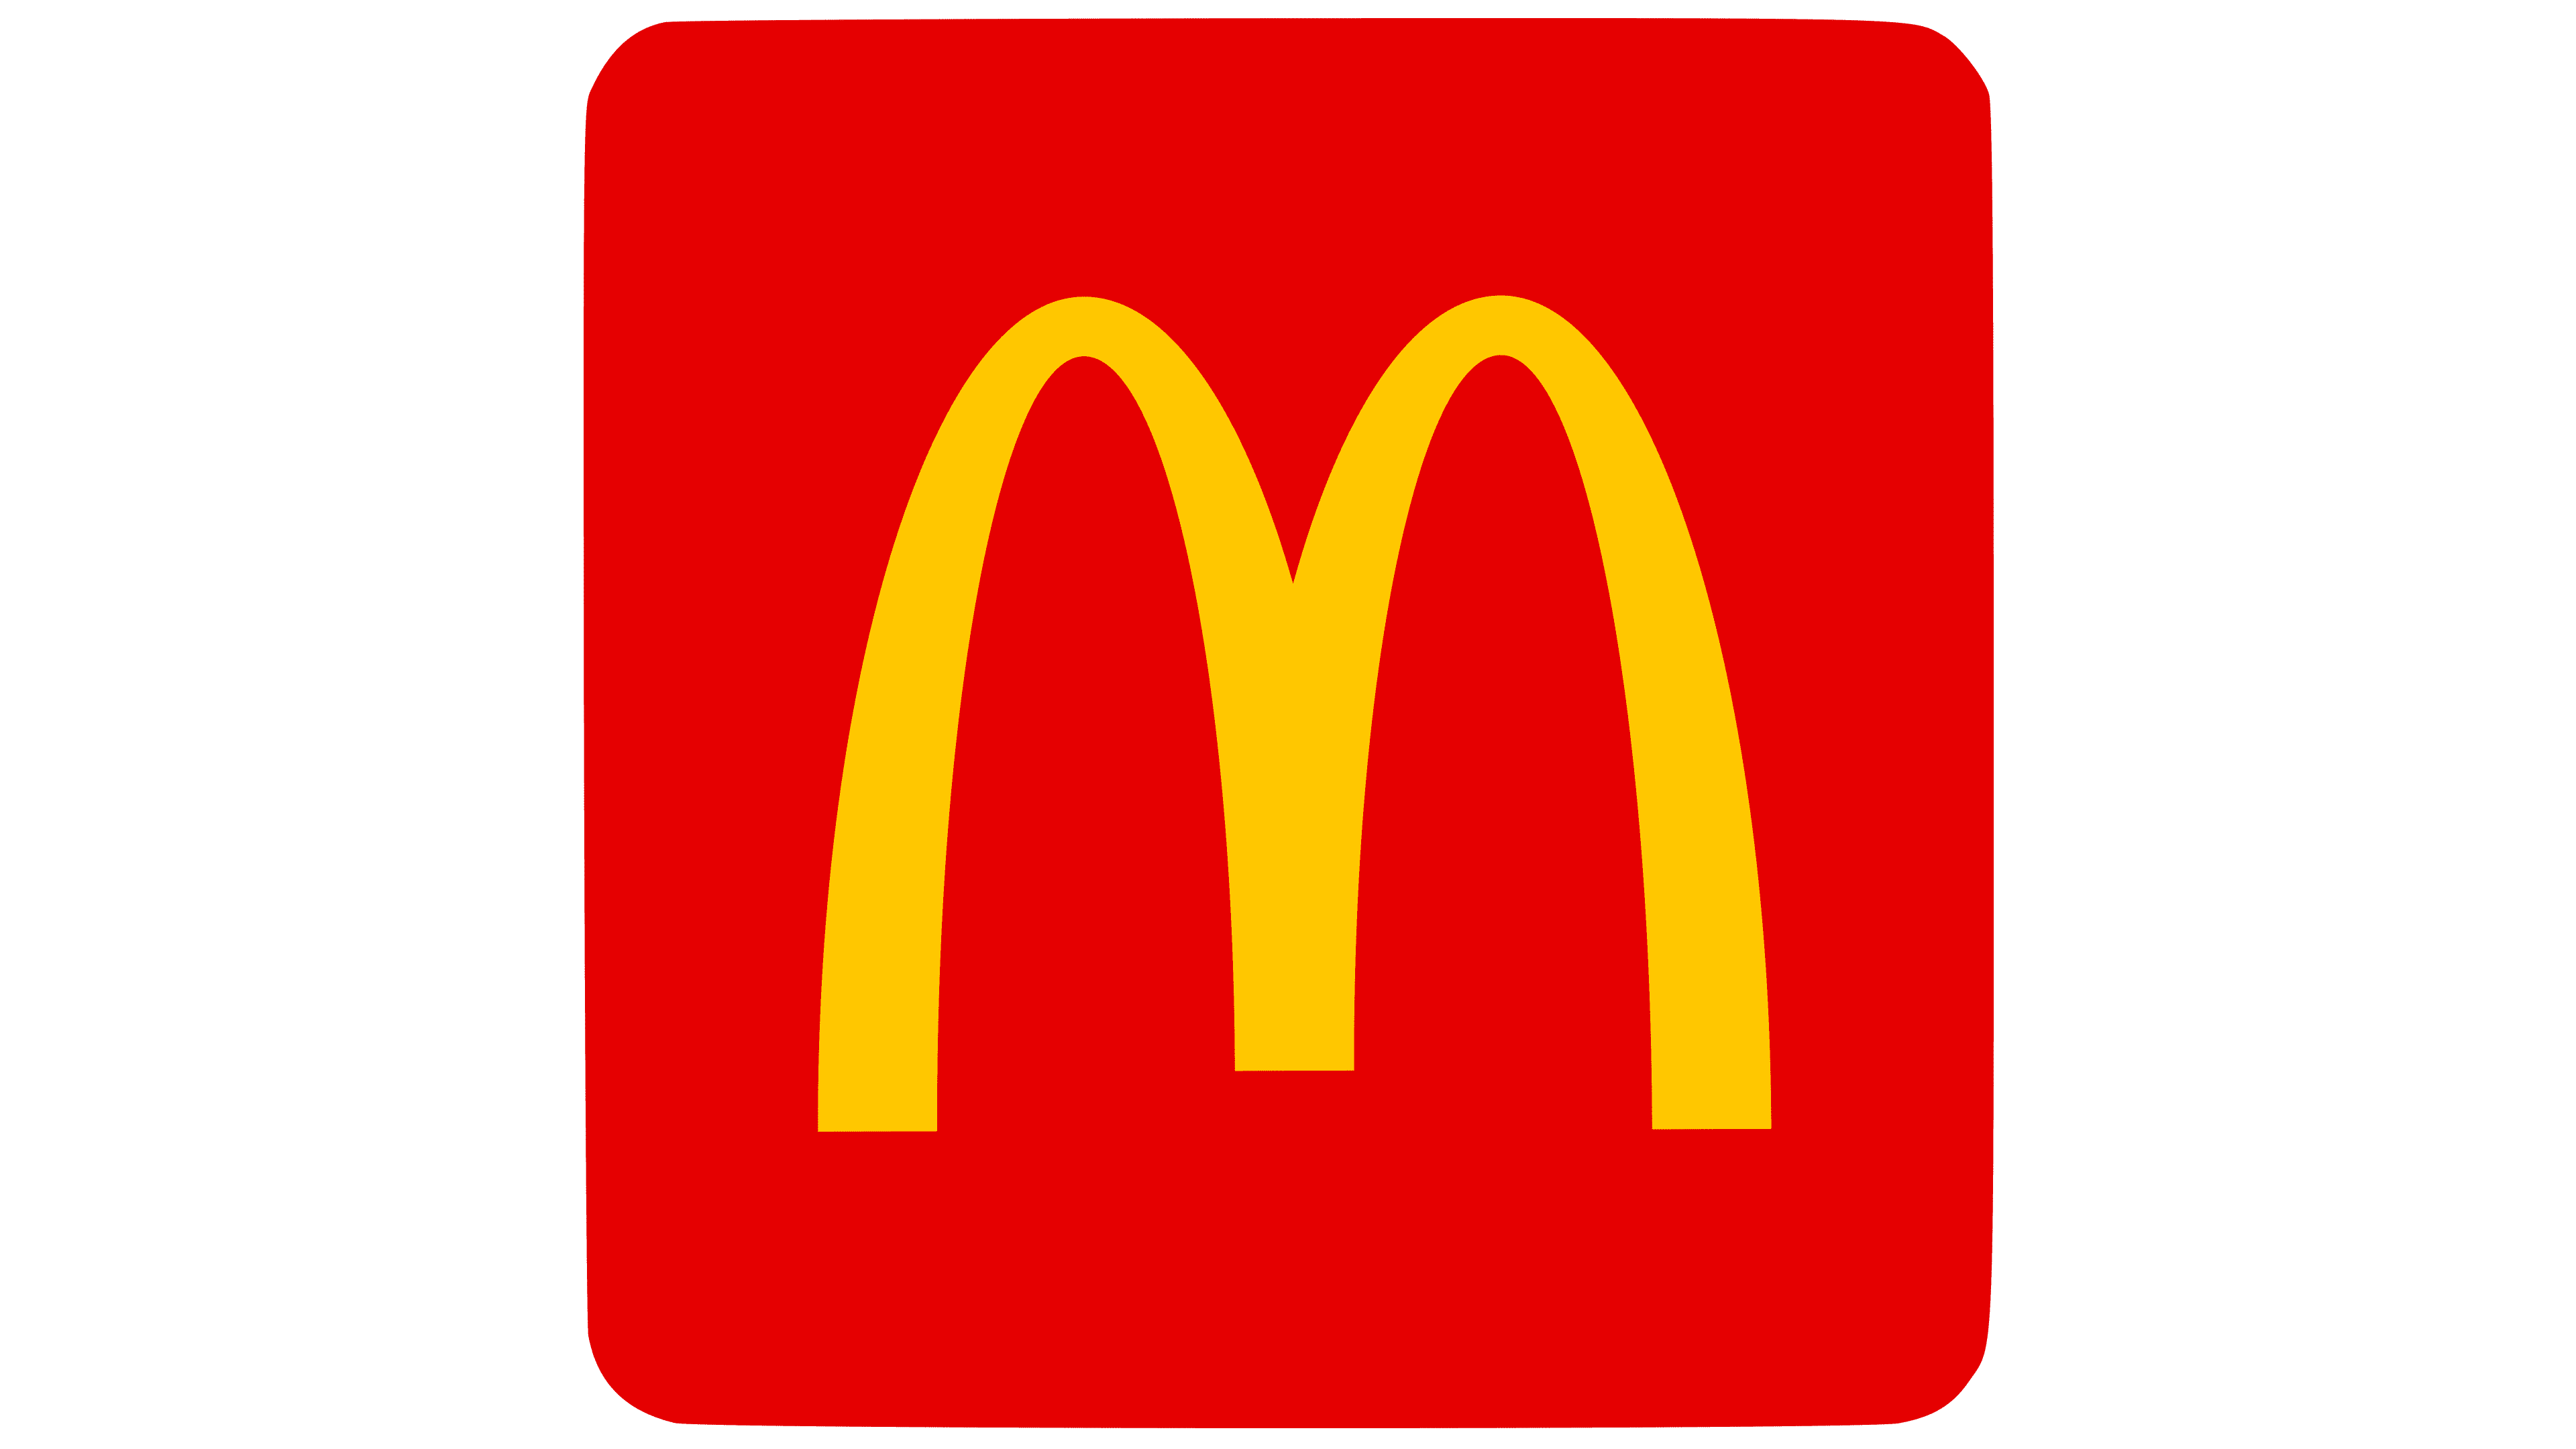 McDonald's logo, opens McDonald's homepage